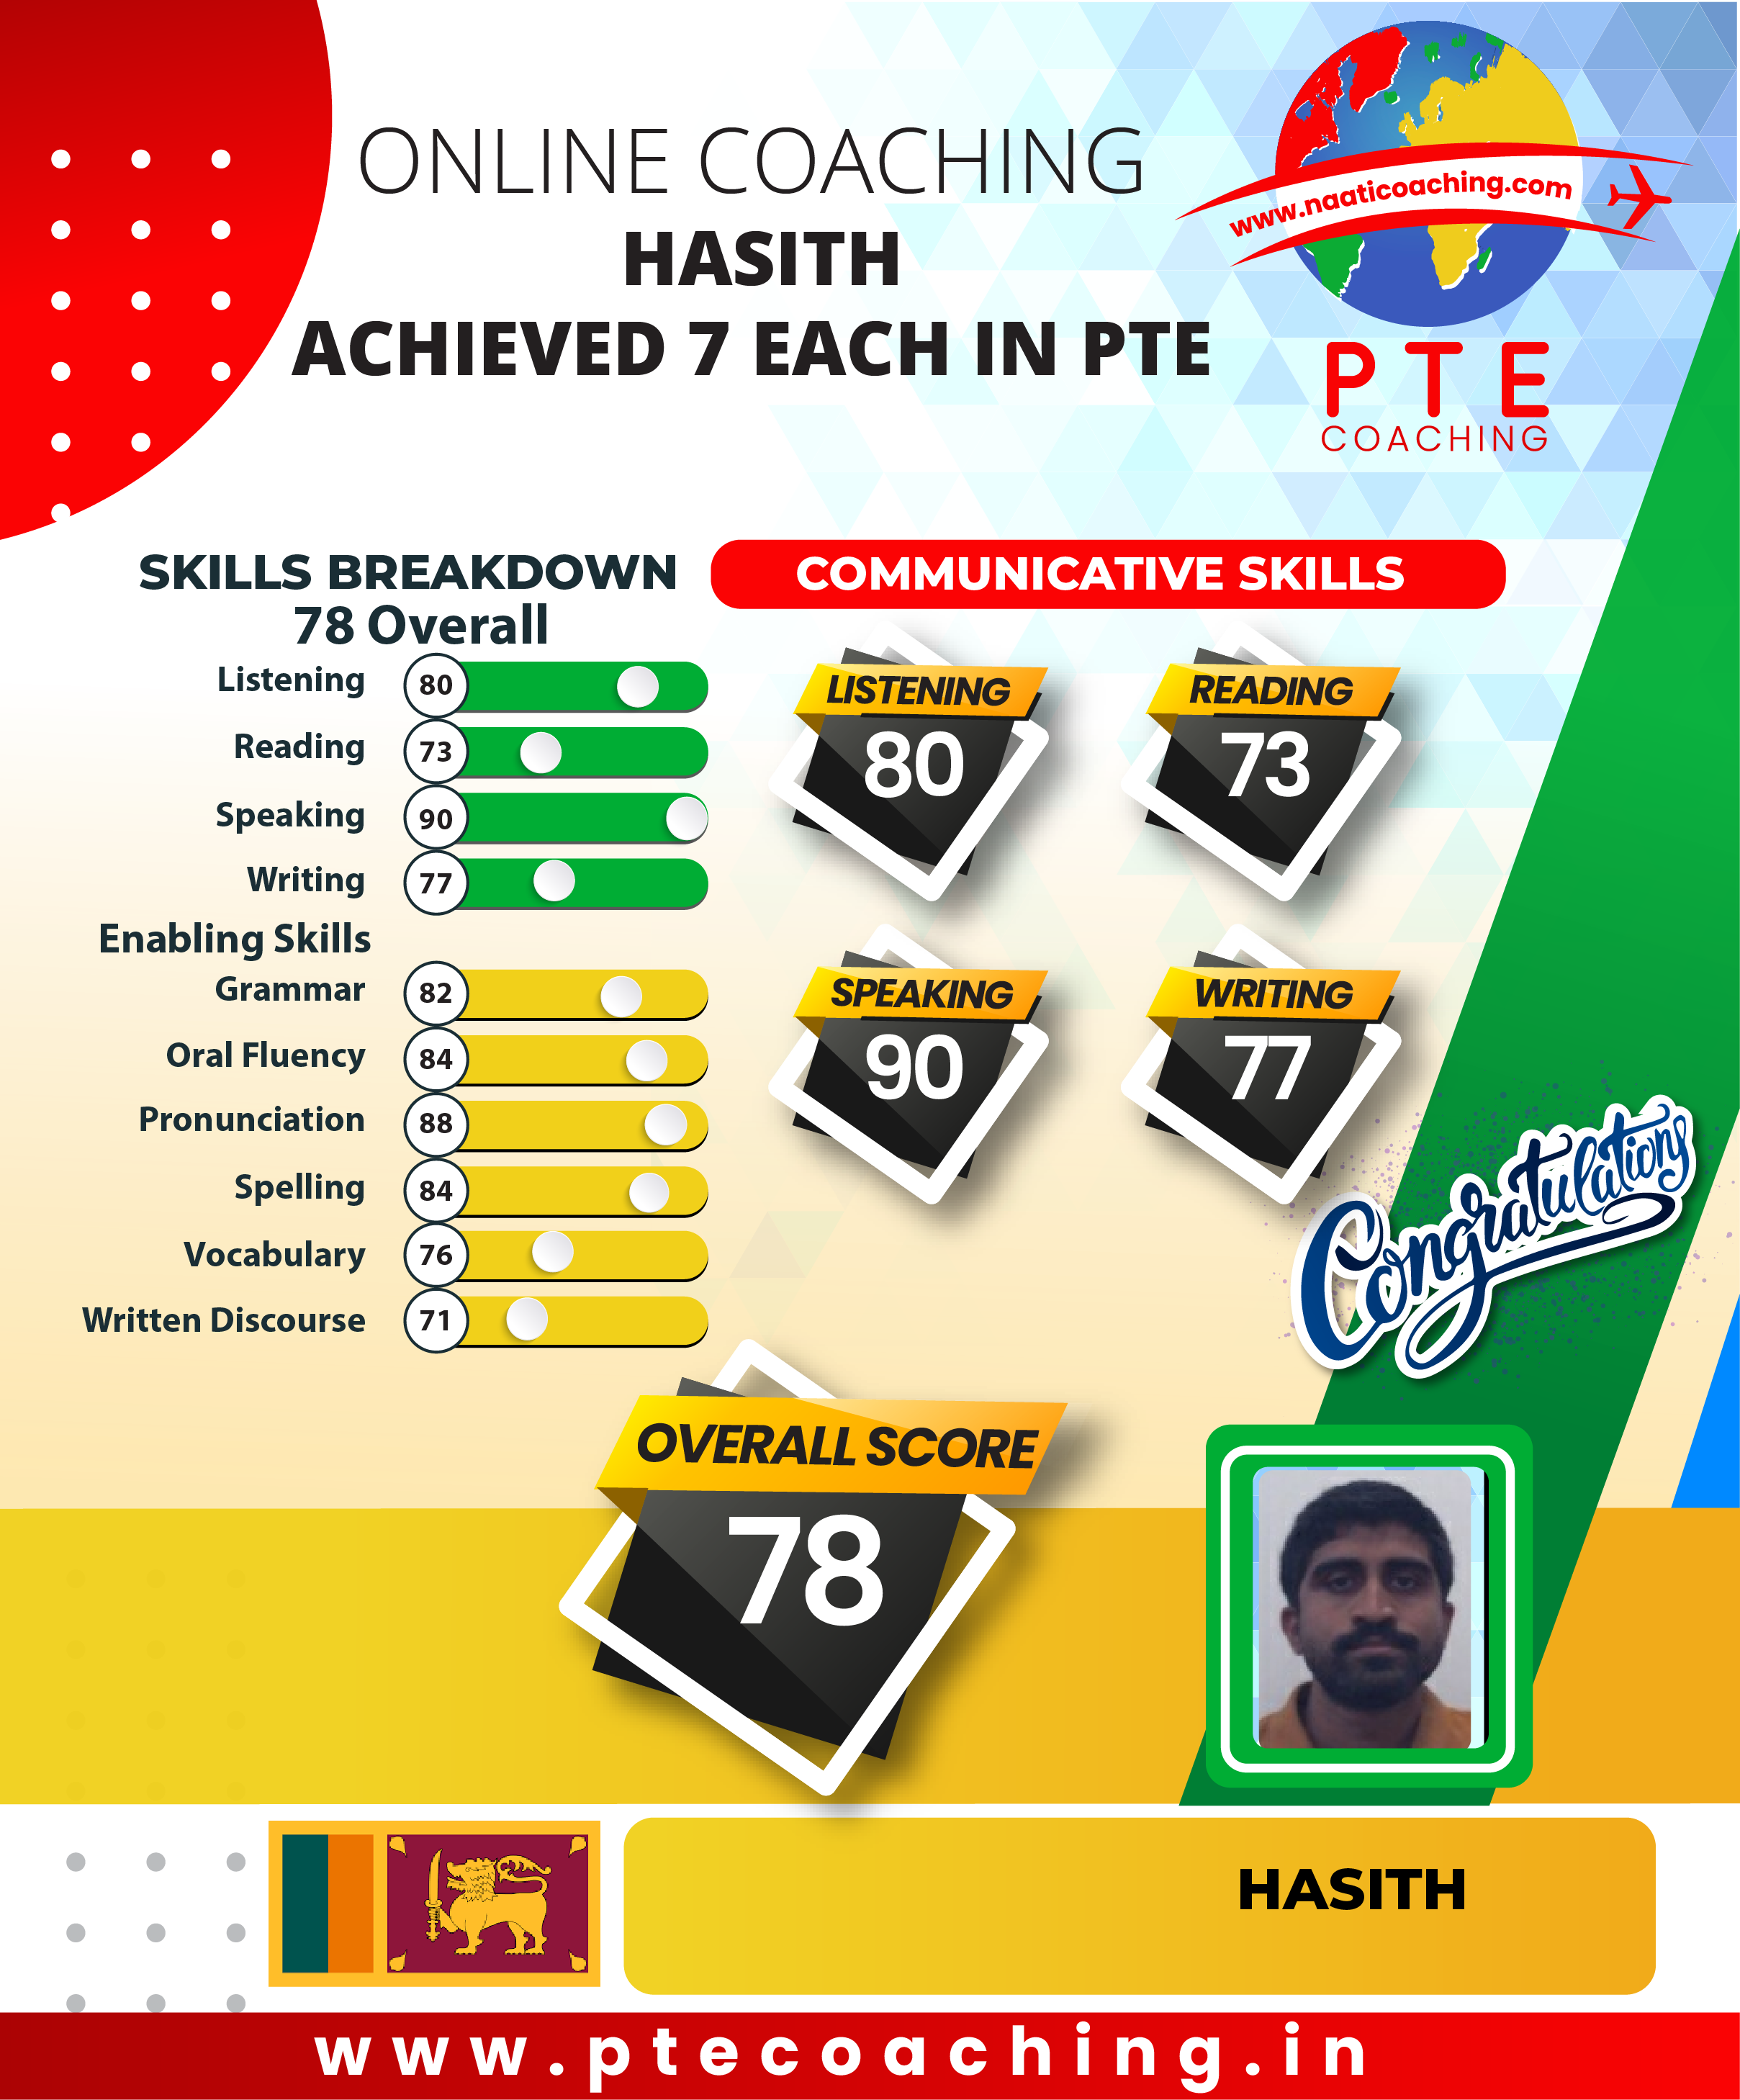 PTE Coaching Scorecard - Hasith achieved 7 each in PTE